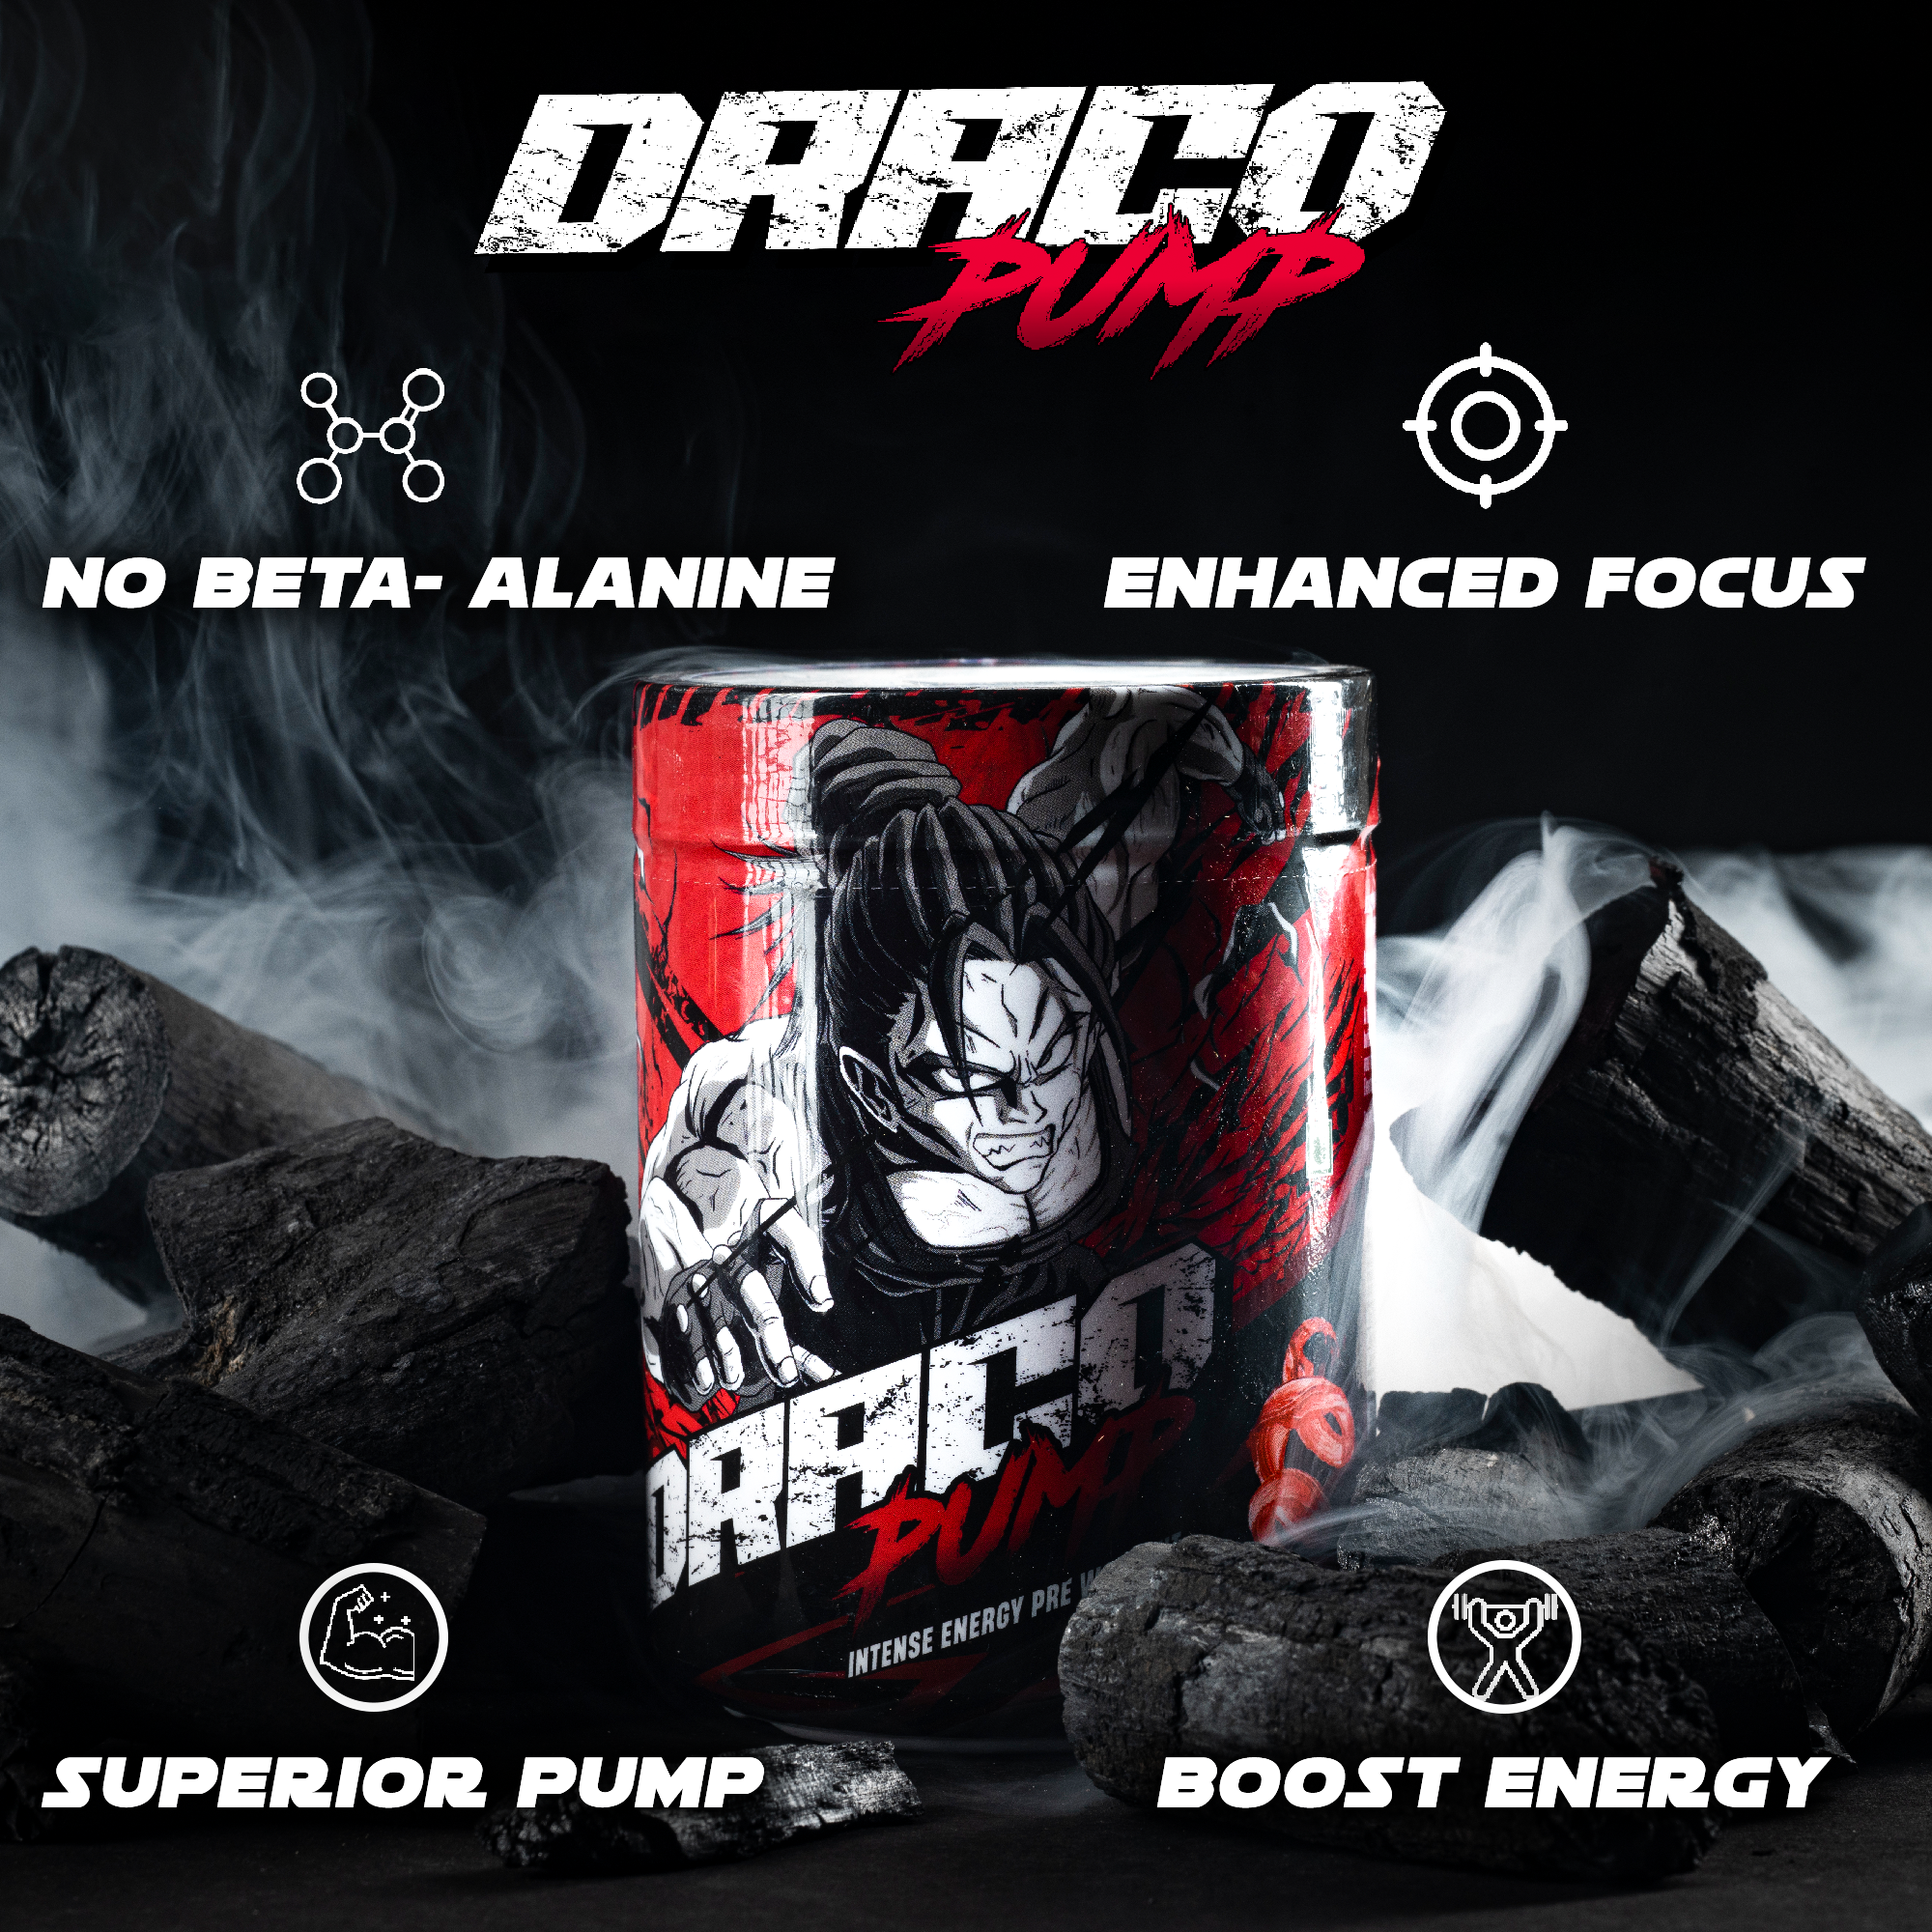 Draco Pump Pre Workout(No Tingling, No Itching, No Beta-Alanine) Power Packed PUMP Formula 20 Servings